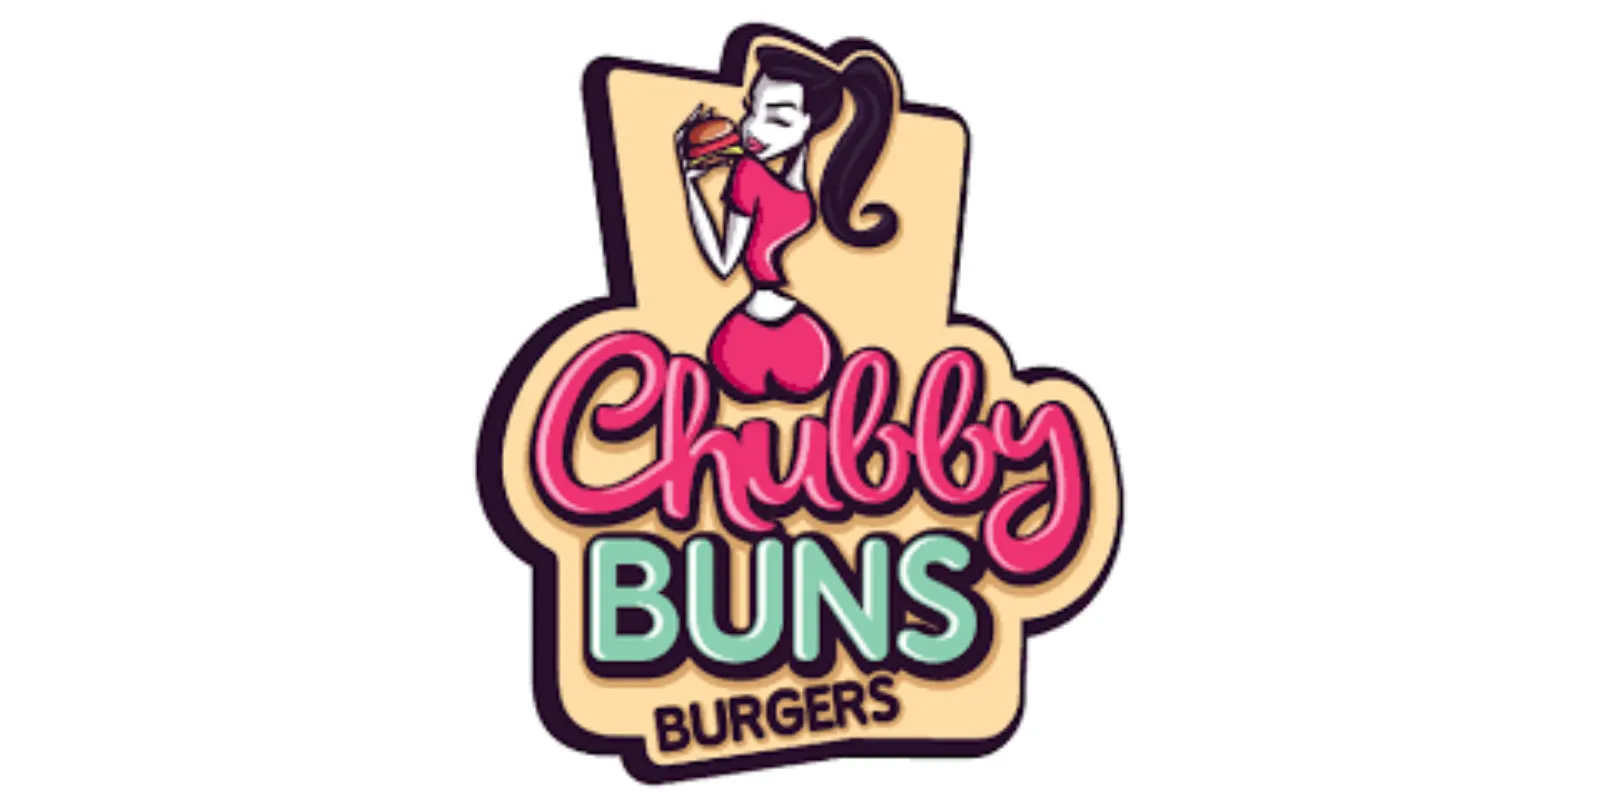 chubby buns menu prices in australia